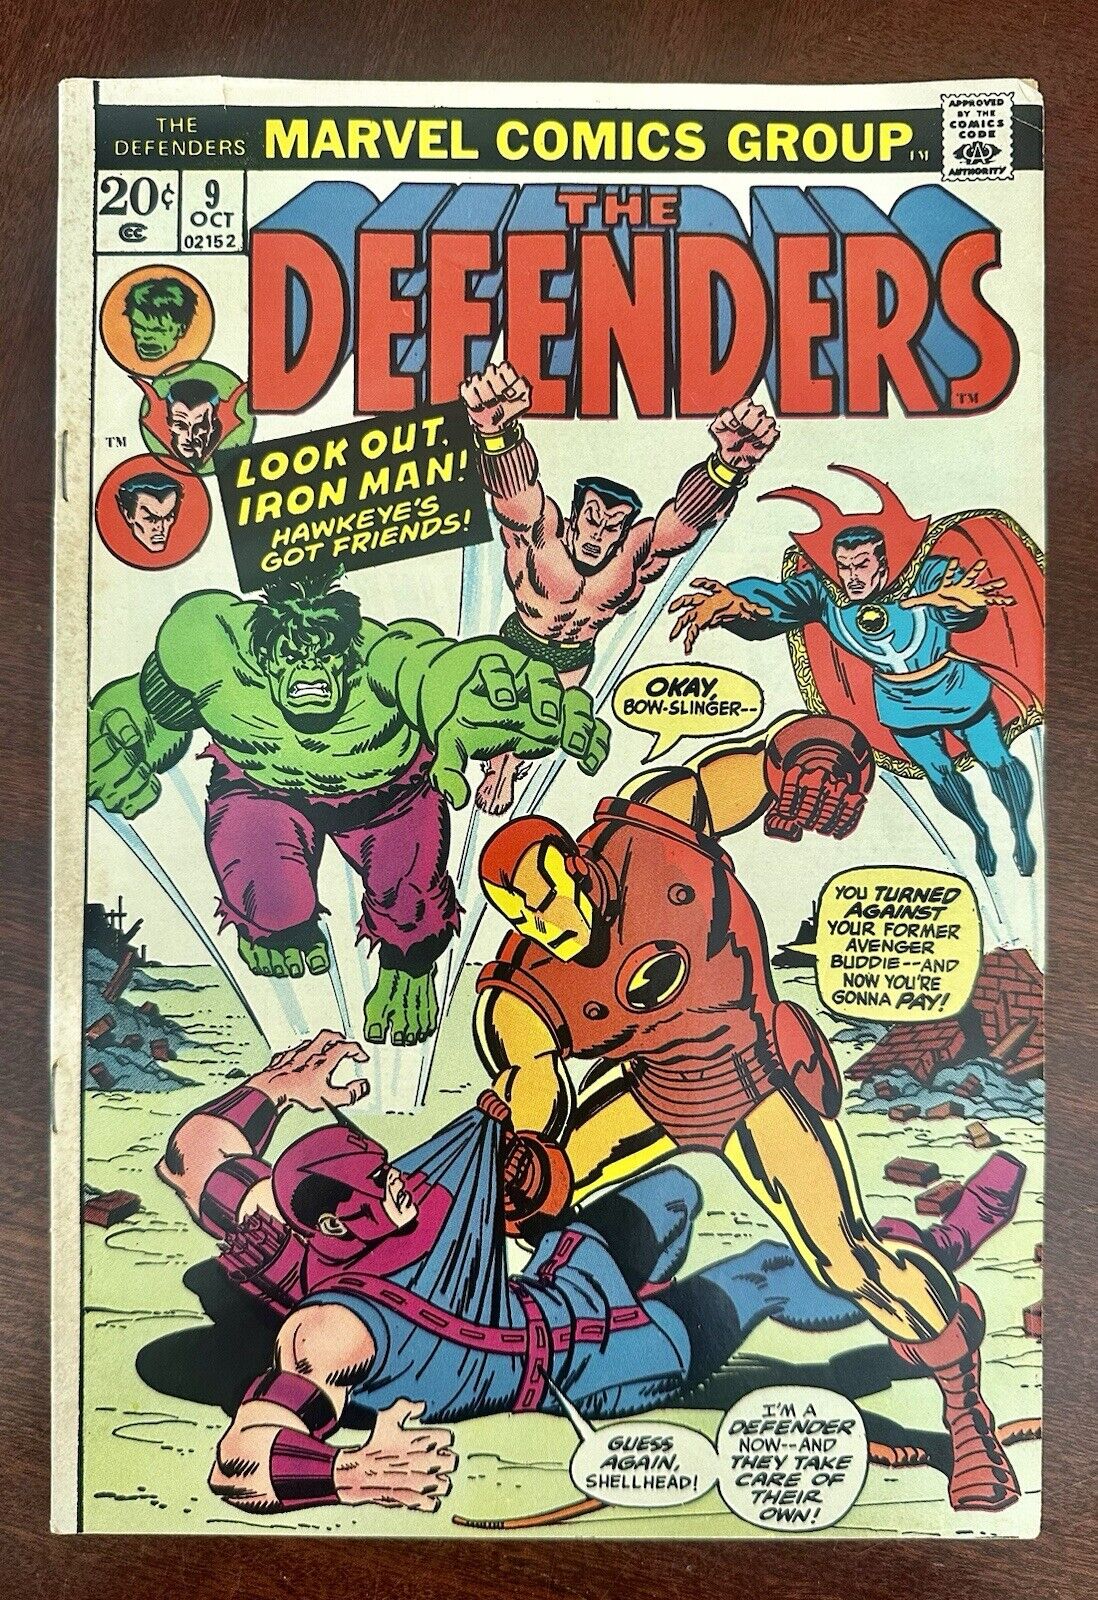 The Defenders #9 - Defenders/Avengers War 1973 Marvel comics